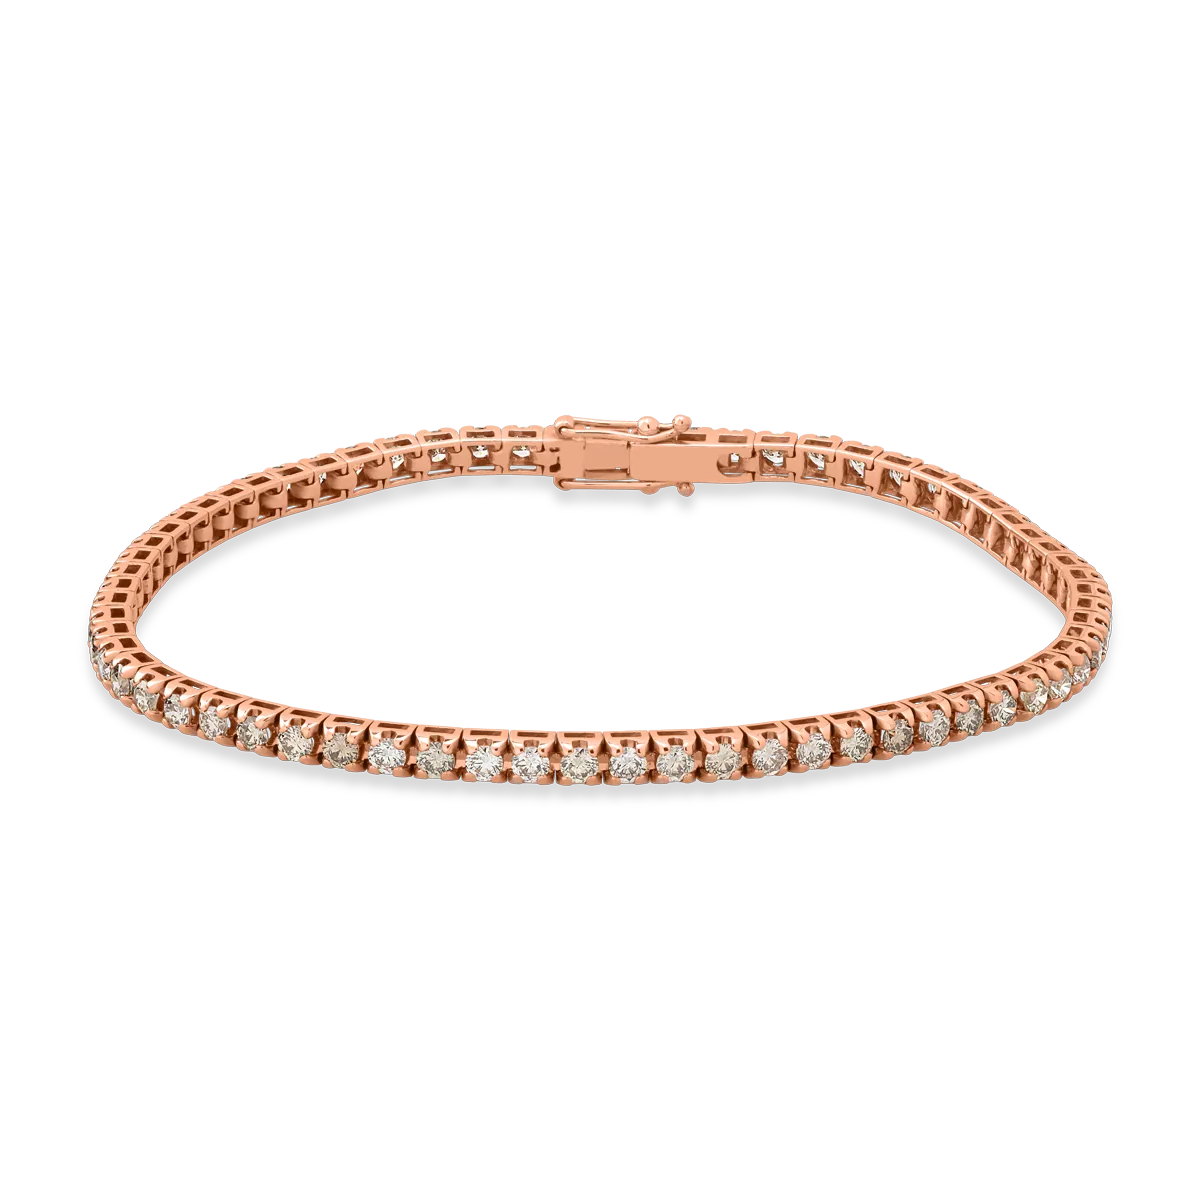 18K rose gold tennis bracelet with 4.85ct brown diamonds